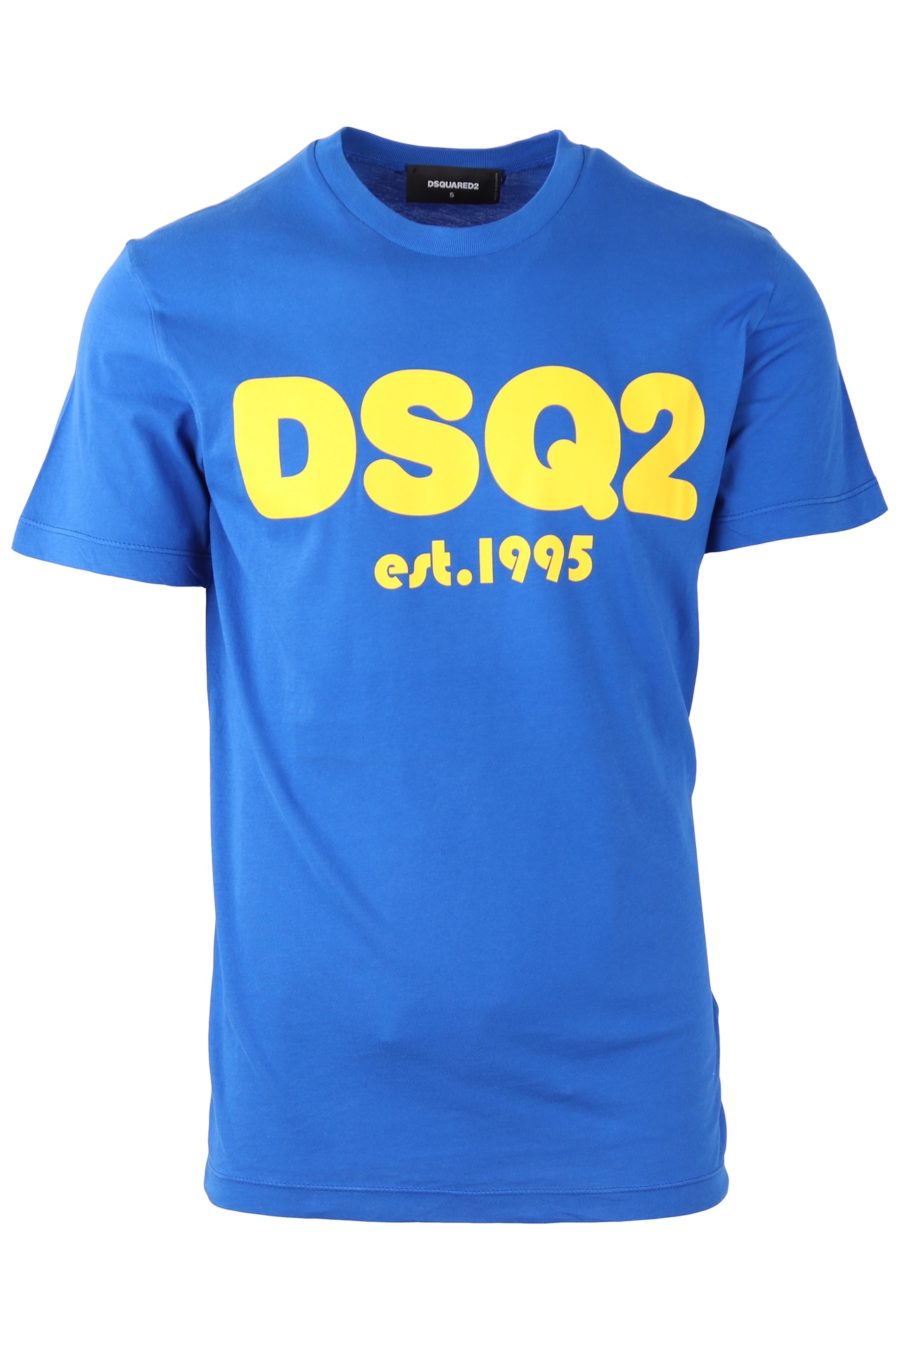 T-shirt Dsquared2 azul com logótipo grande DSQ2 - 09c8819637b6c20c862834a1bee4c7cb524ee88b